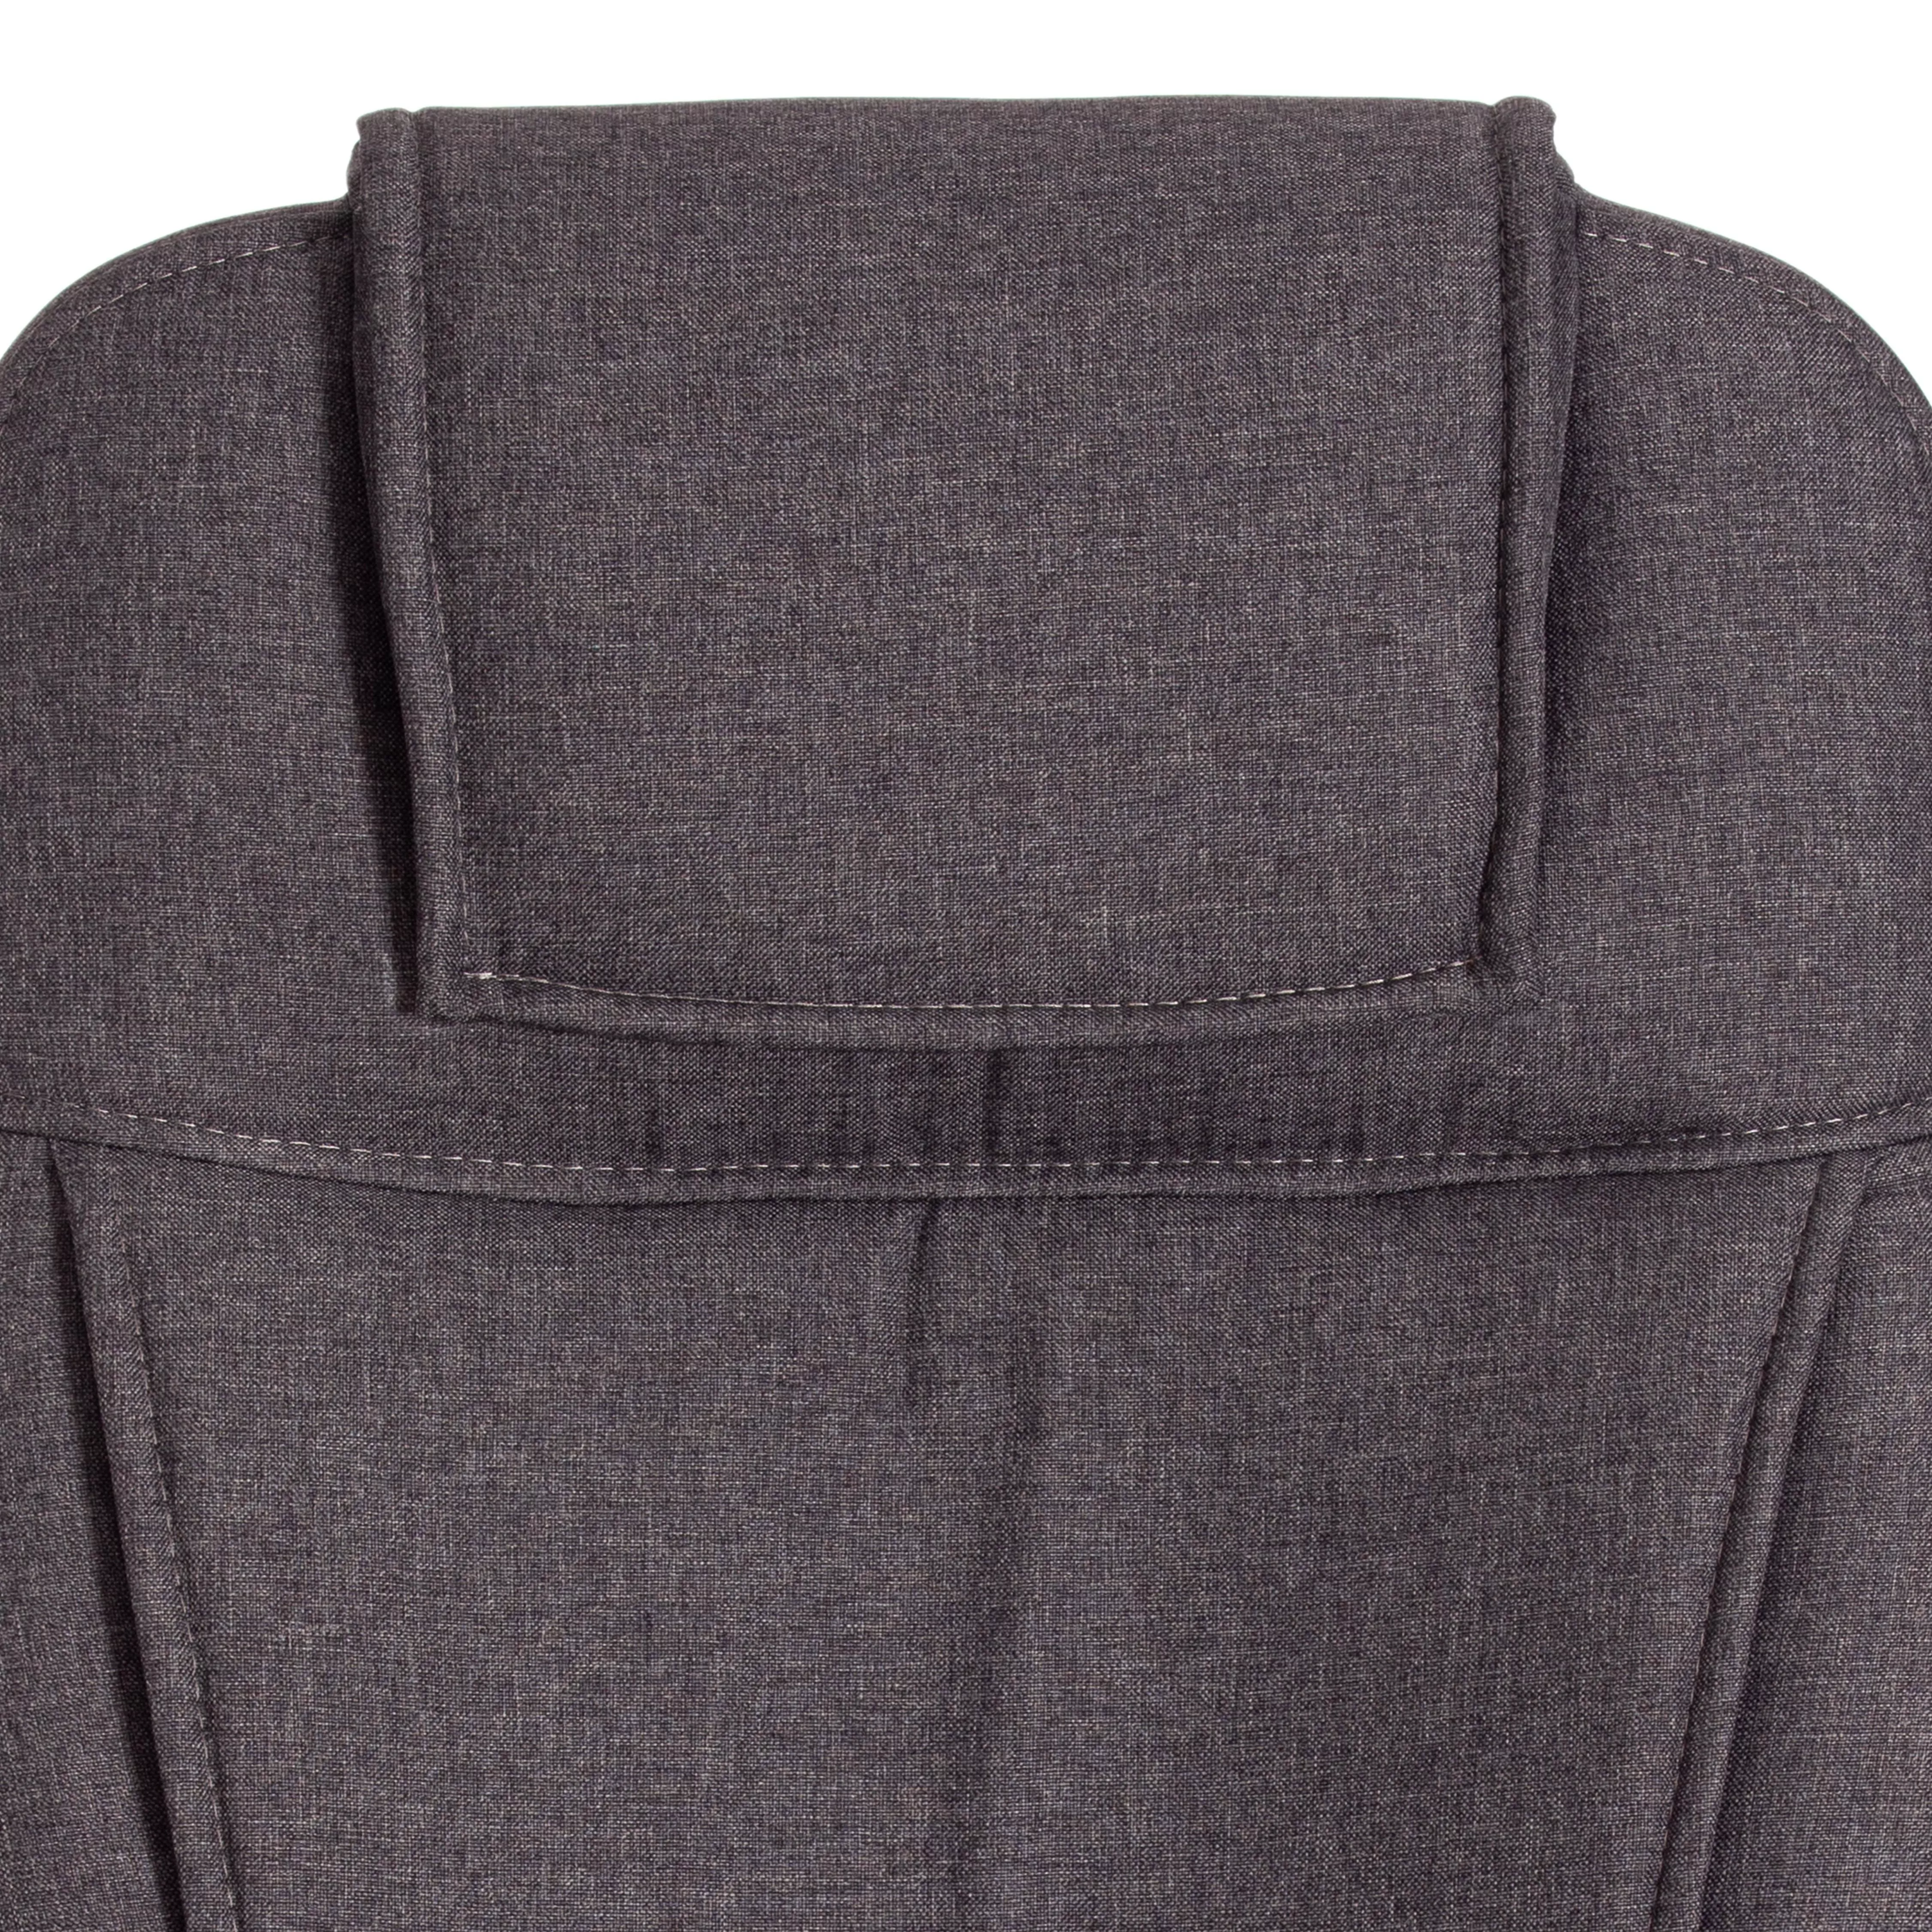 Кресло BERGAMO (22) ткань темно-серый